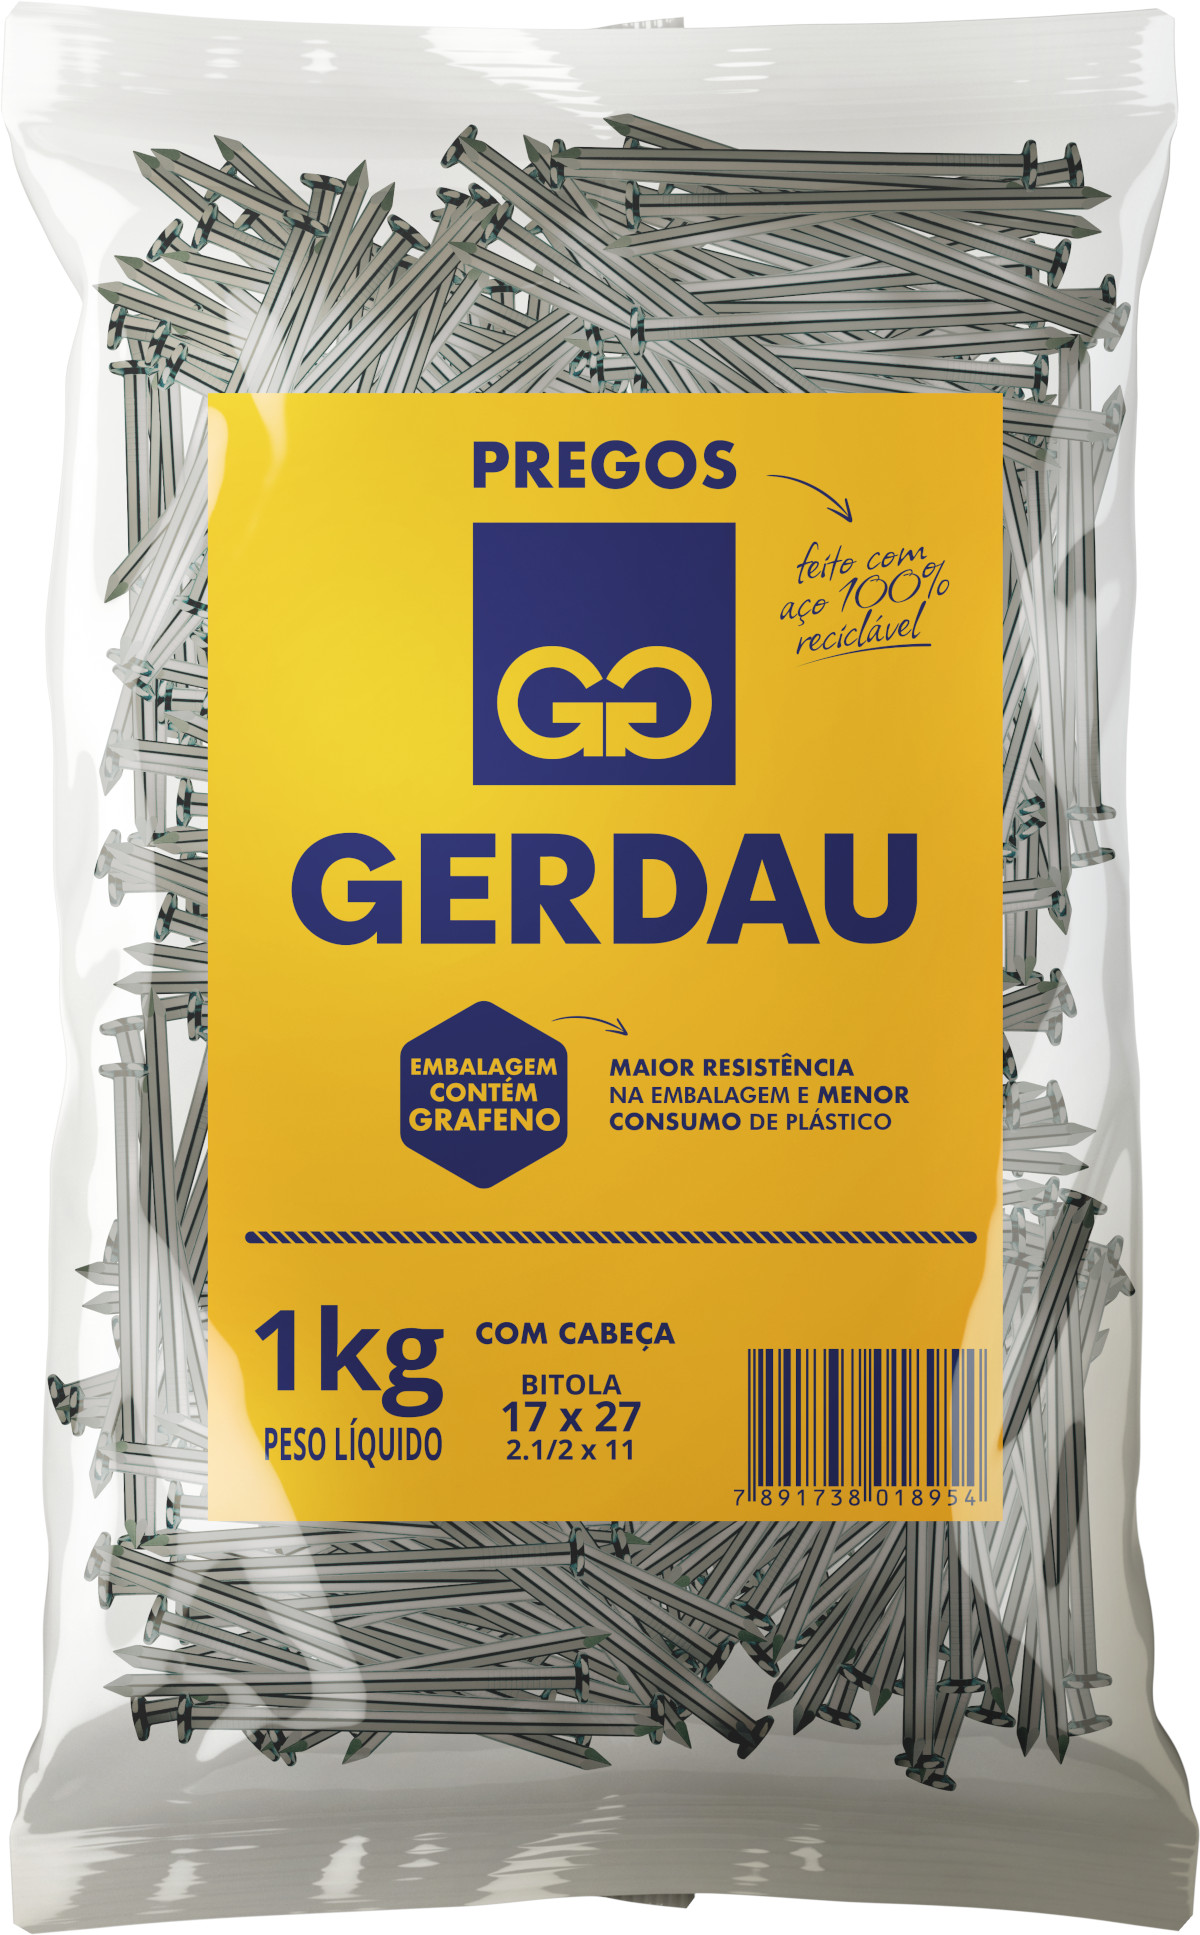 Gerdau Graphene推出添加石墨烯的包装 每年减少Gerdau钉子产品直接塑料消耗72吨